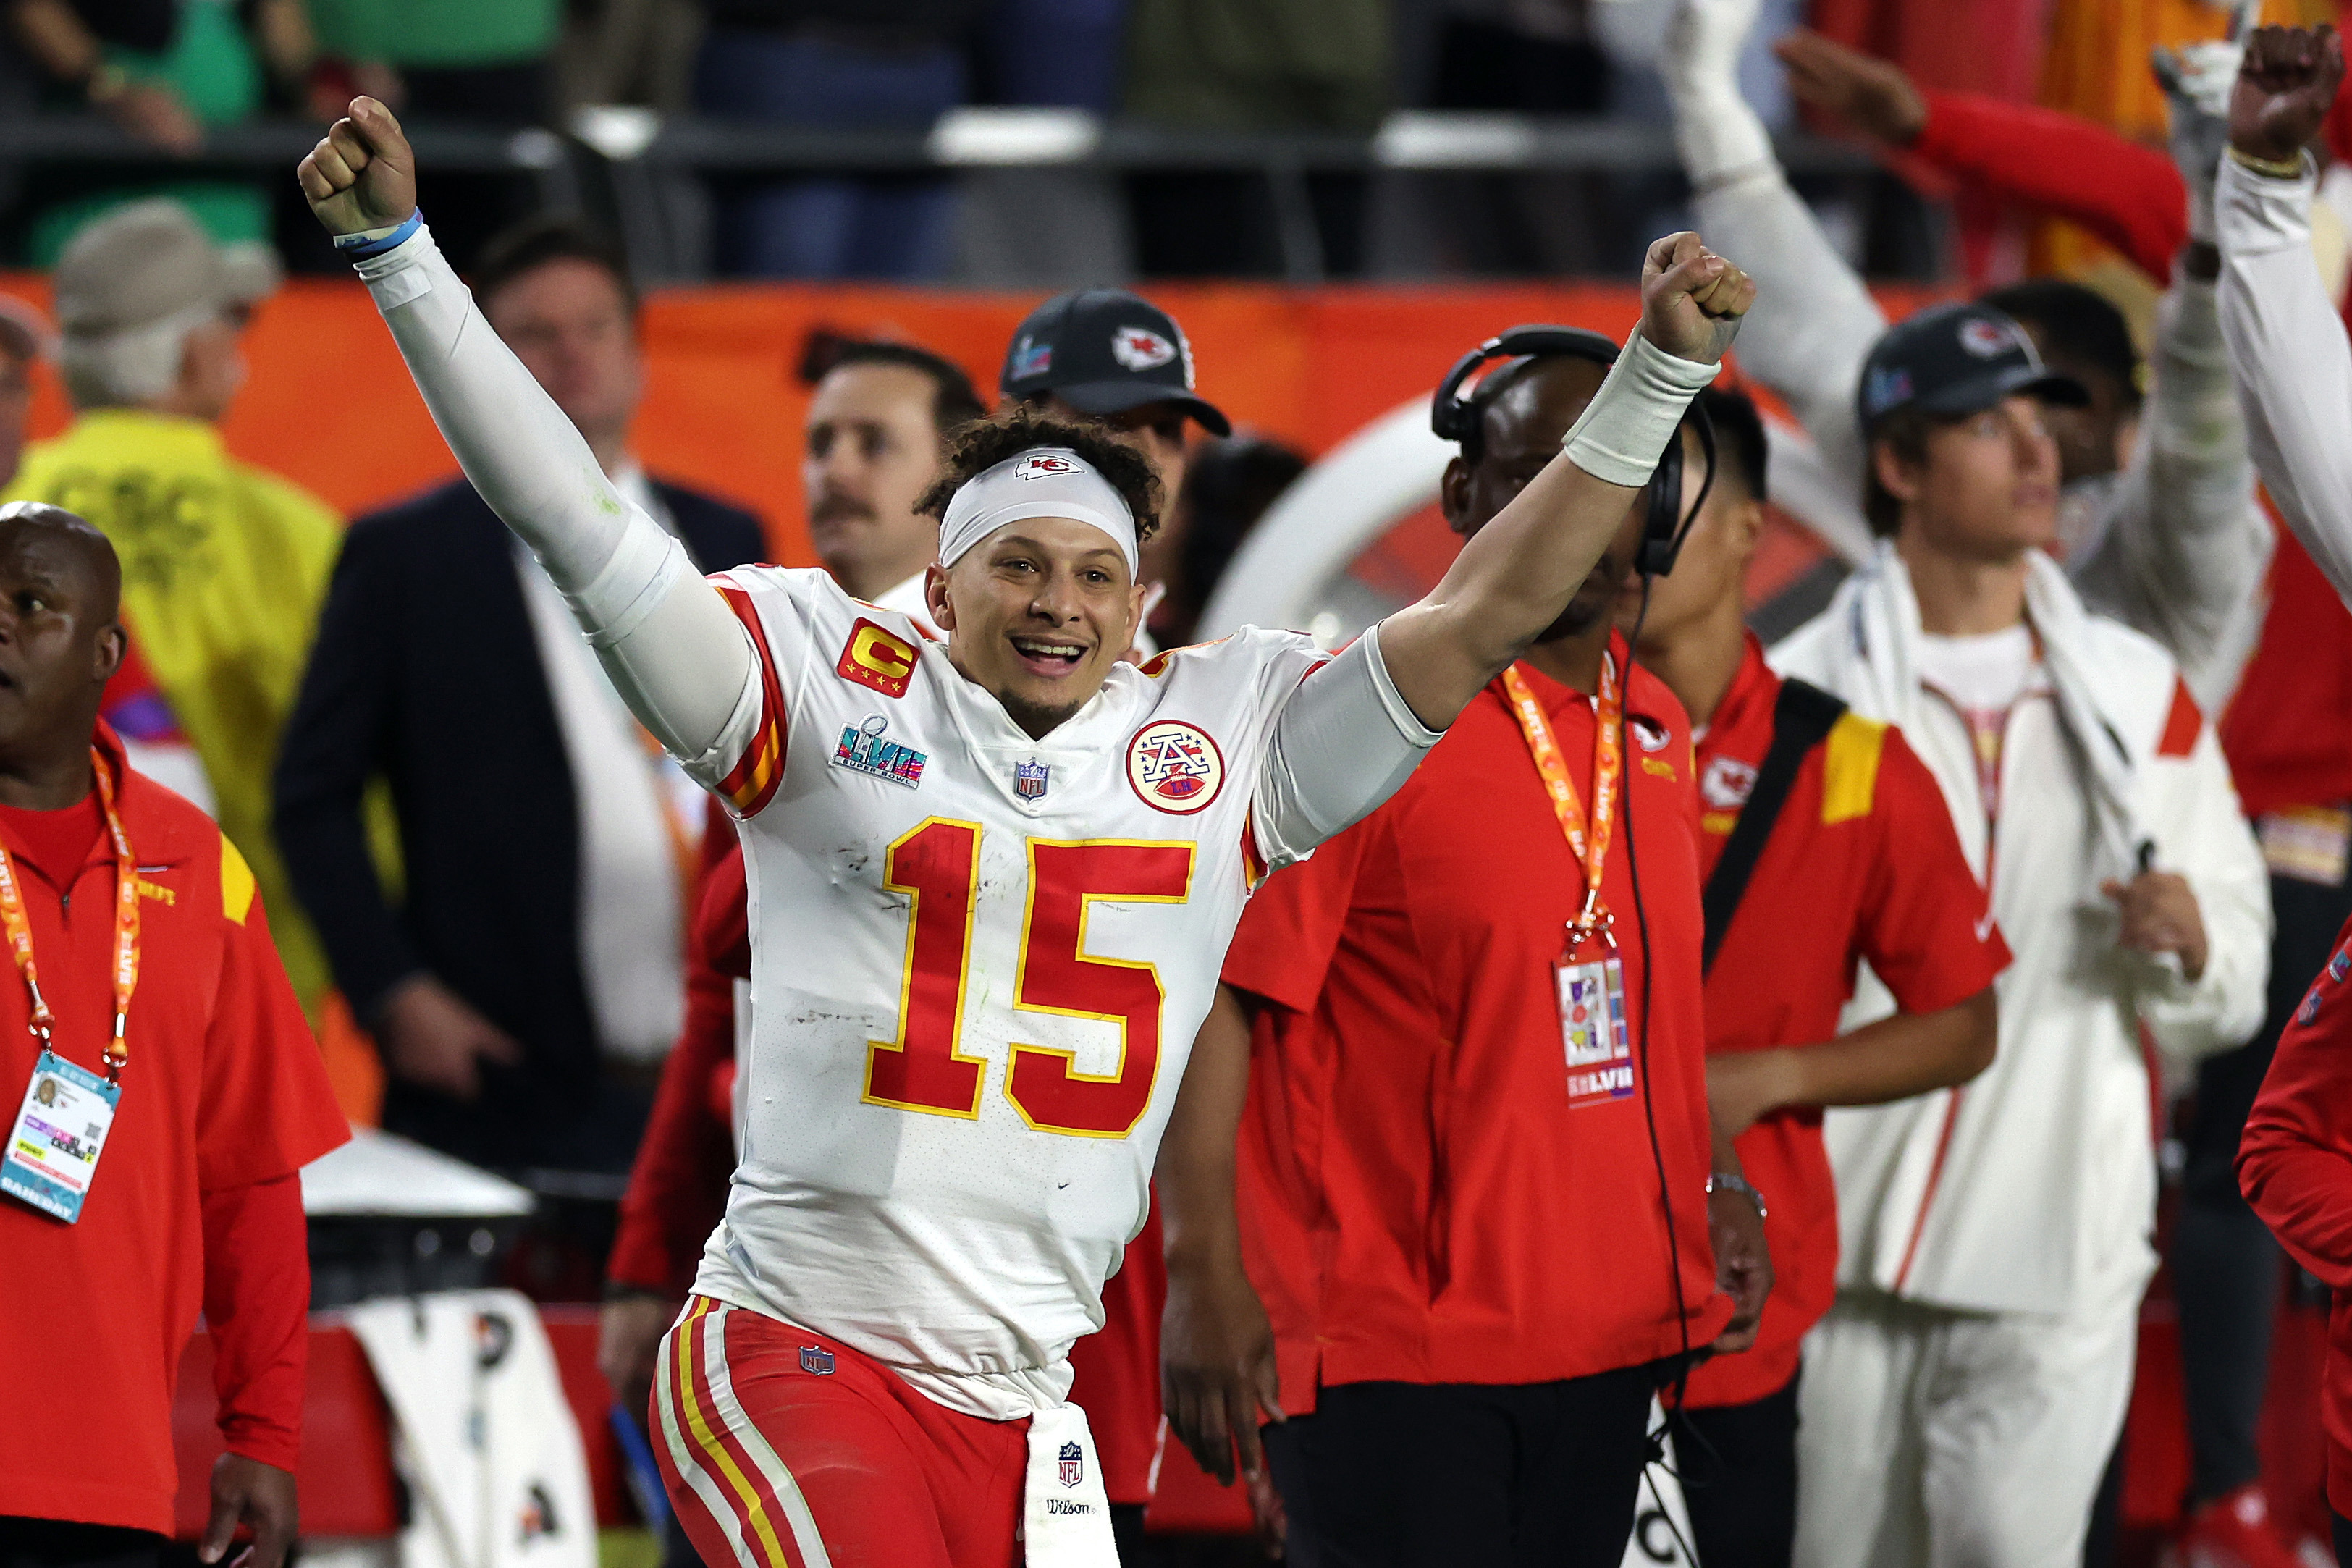 Best Kansas City Chiefs merch to celebrate Super Bowl 2023 win